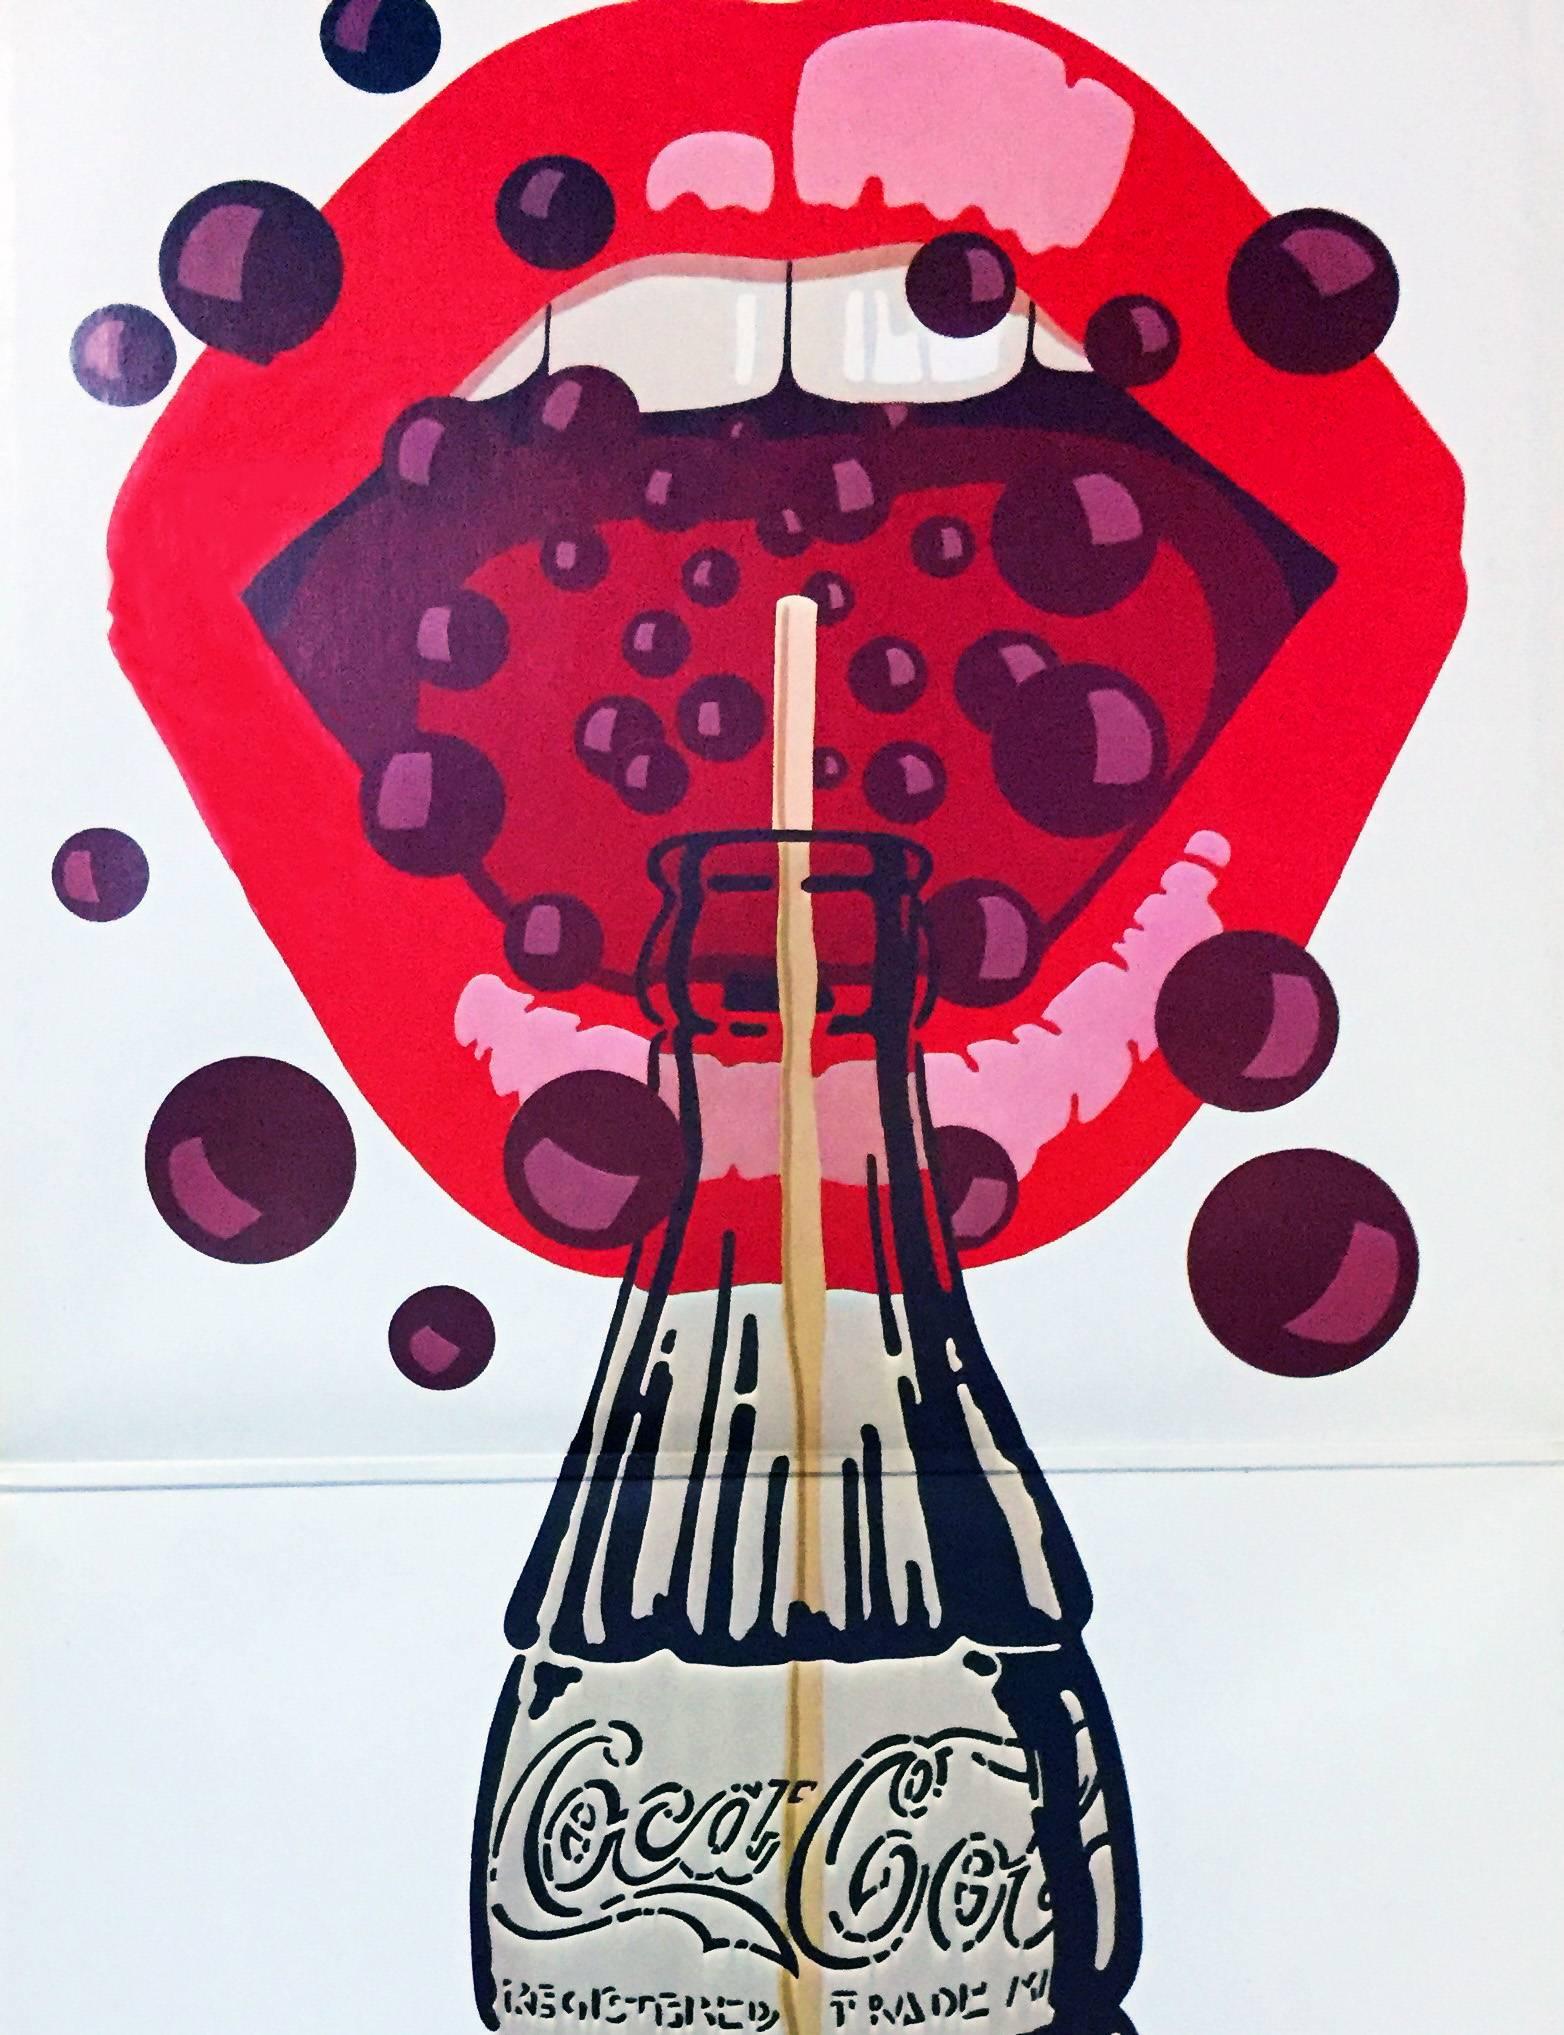 Andy Warhol Velvet Underground Record Art - Pop Art Mixed Media Art by The Velvet Underground